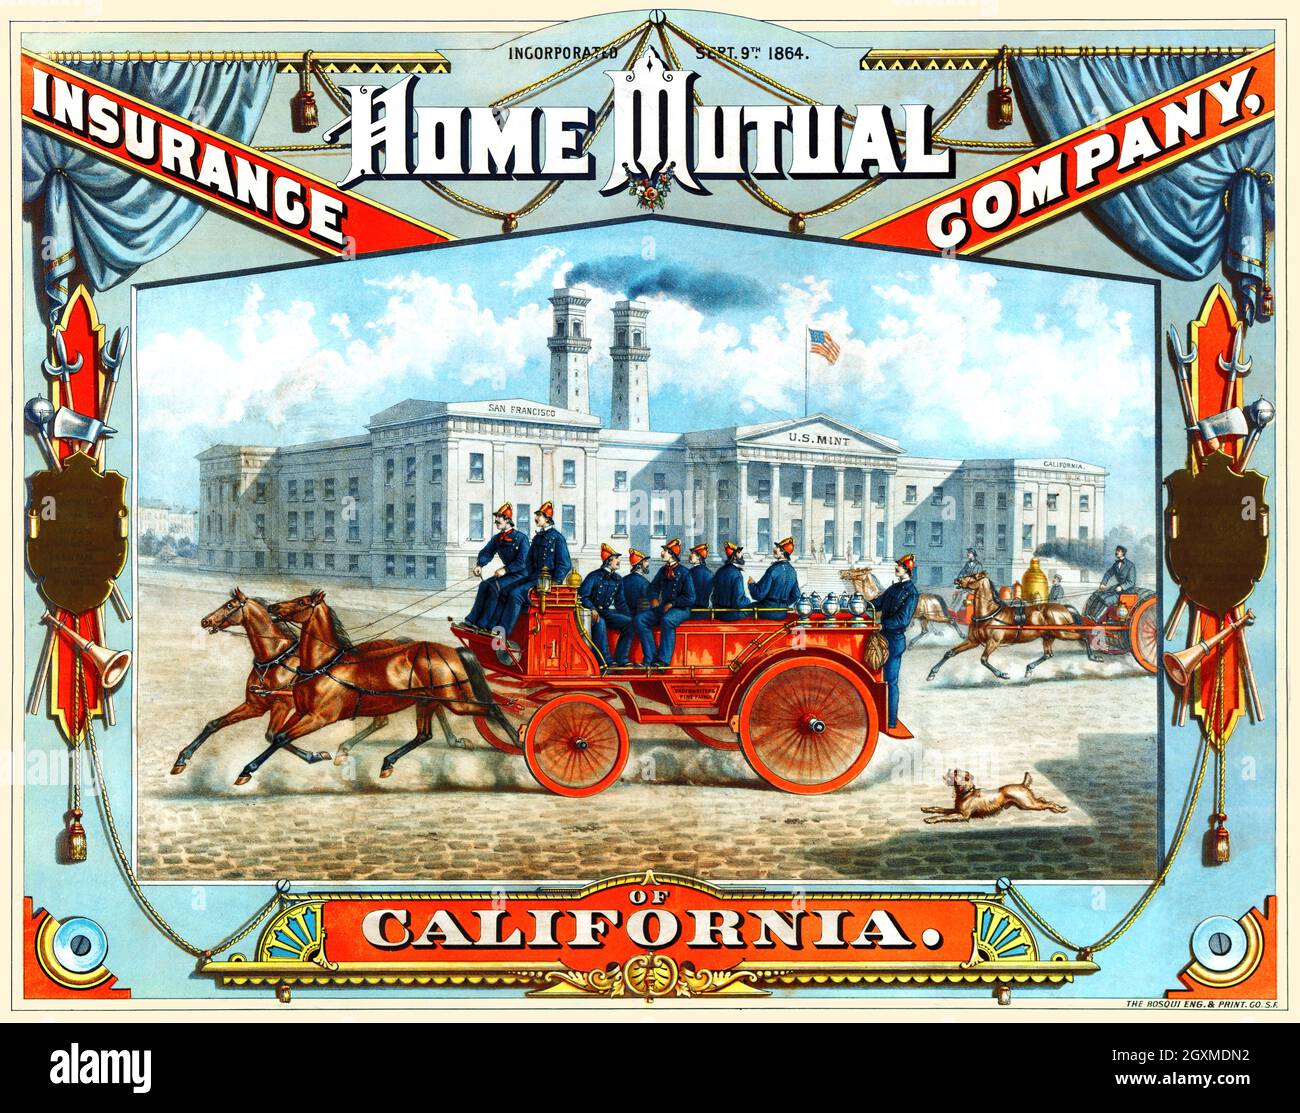 Home Mutual Insurance Company of California Stock Photo